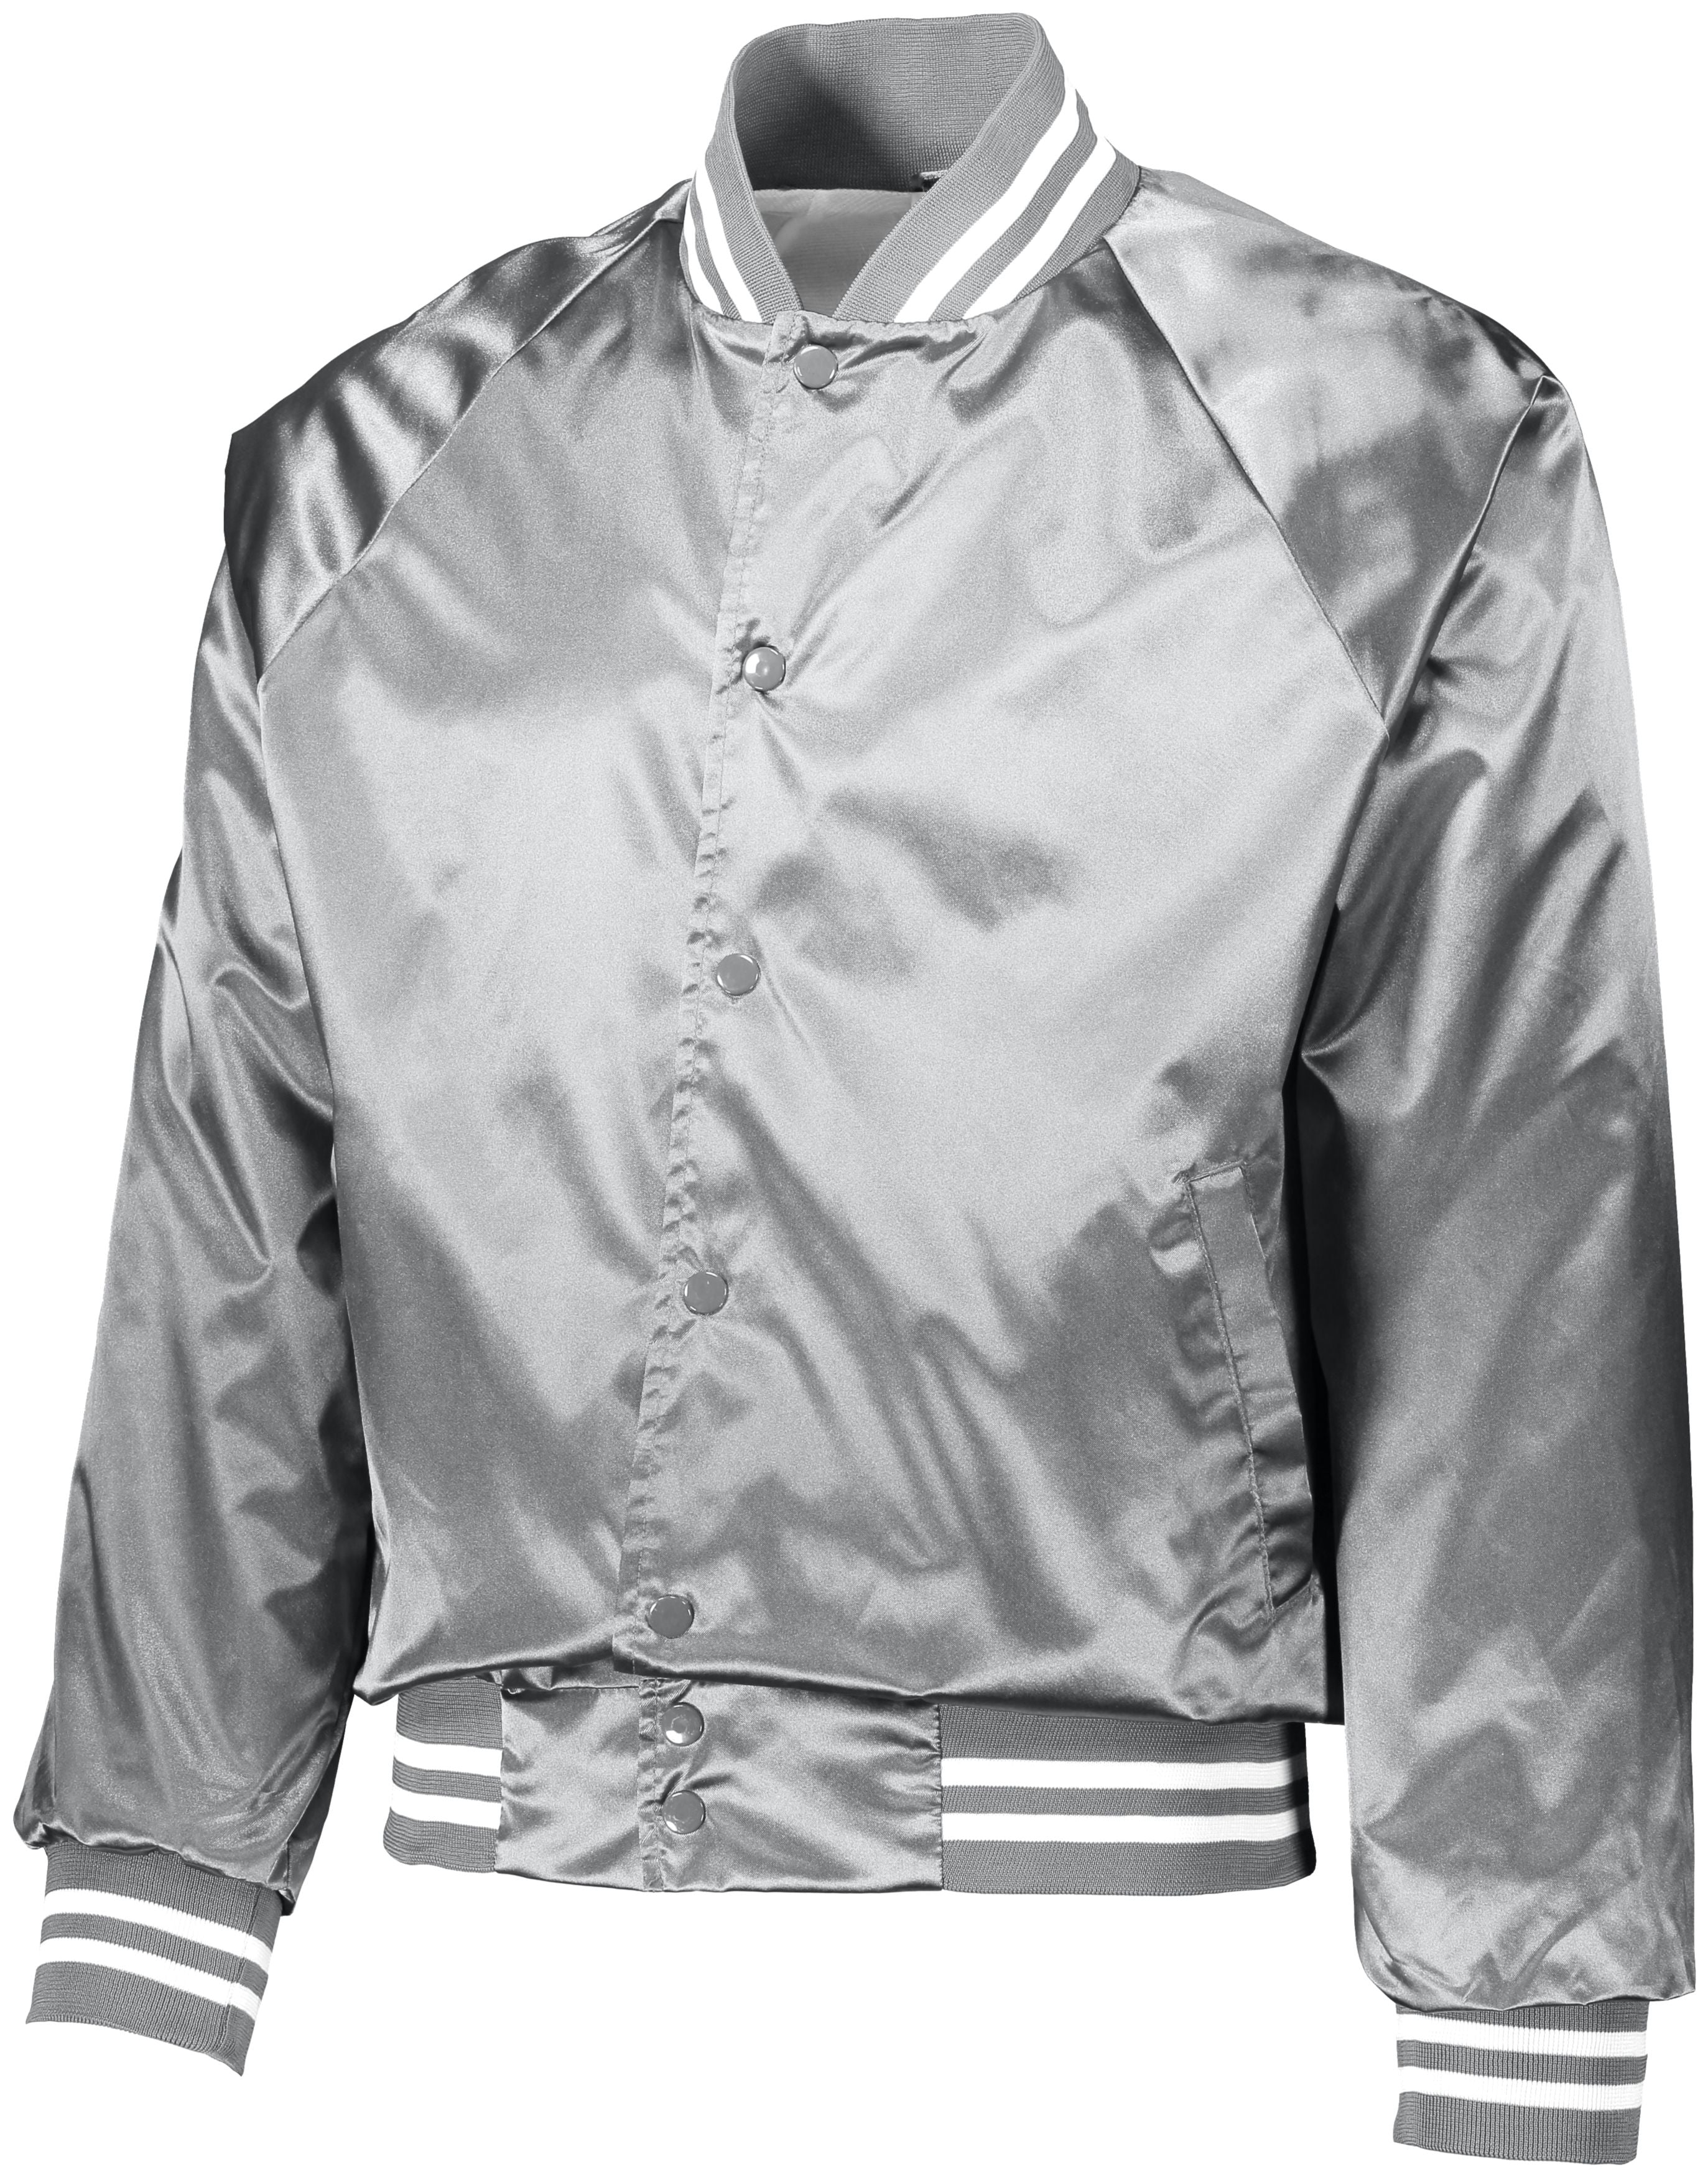 Augusta Sportswear Satin Baseball Jacket/Striped Trim in Metallic Silver/White  -Part of the Adult, Adult-Jacket, Augusta-Products, Baseball, Outerwear, All-Sports, All-Sports-1 product lines at KanaleyCreations.com